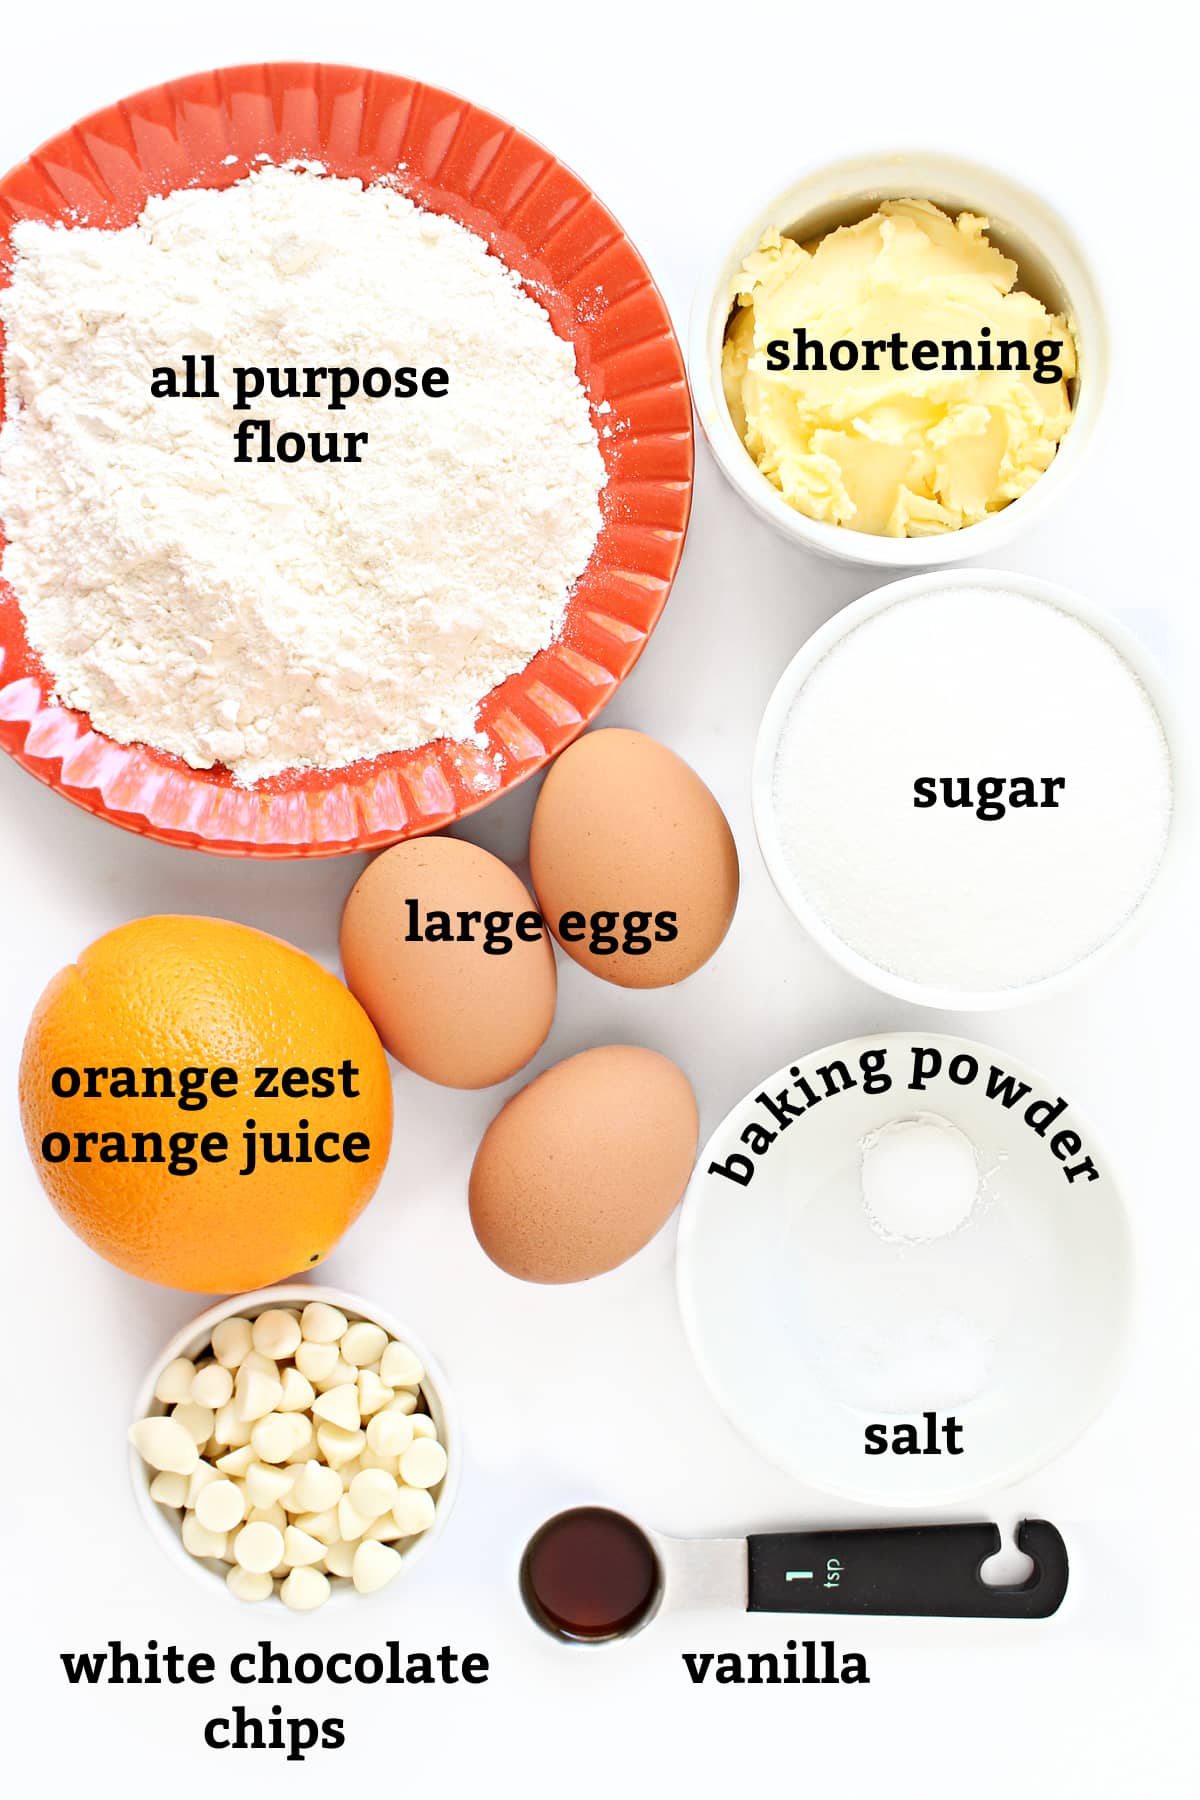 Ingredients: flour, shortening, sugar, large eggs, orange juice/zest, baking powder, salt, white chocolate chips, vanilla.